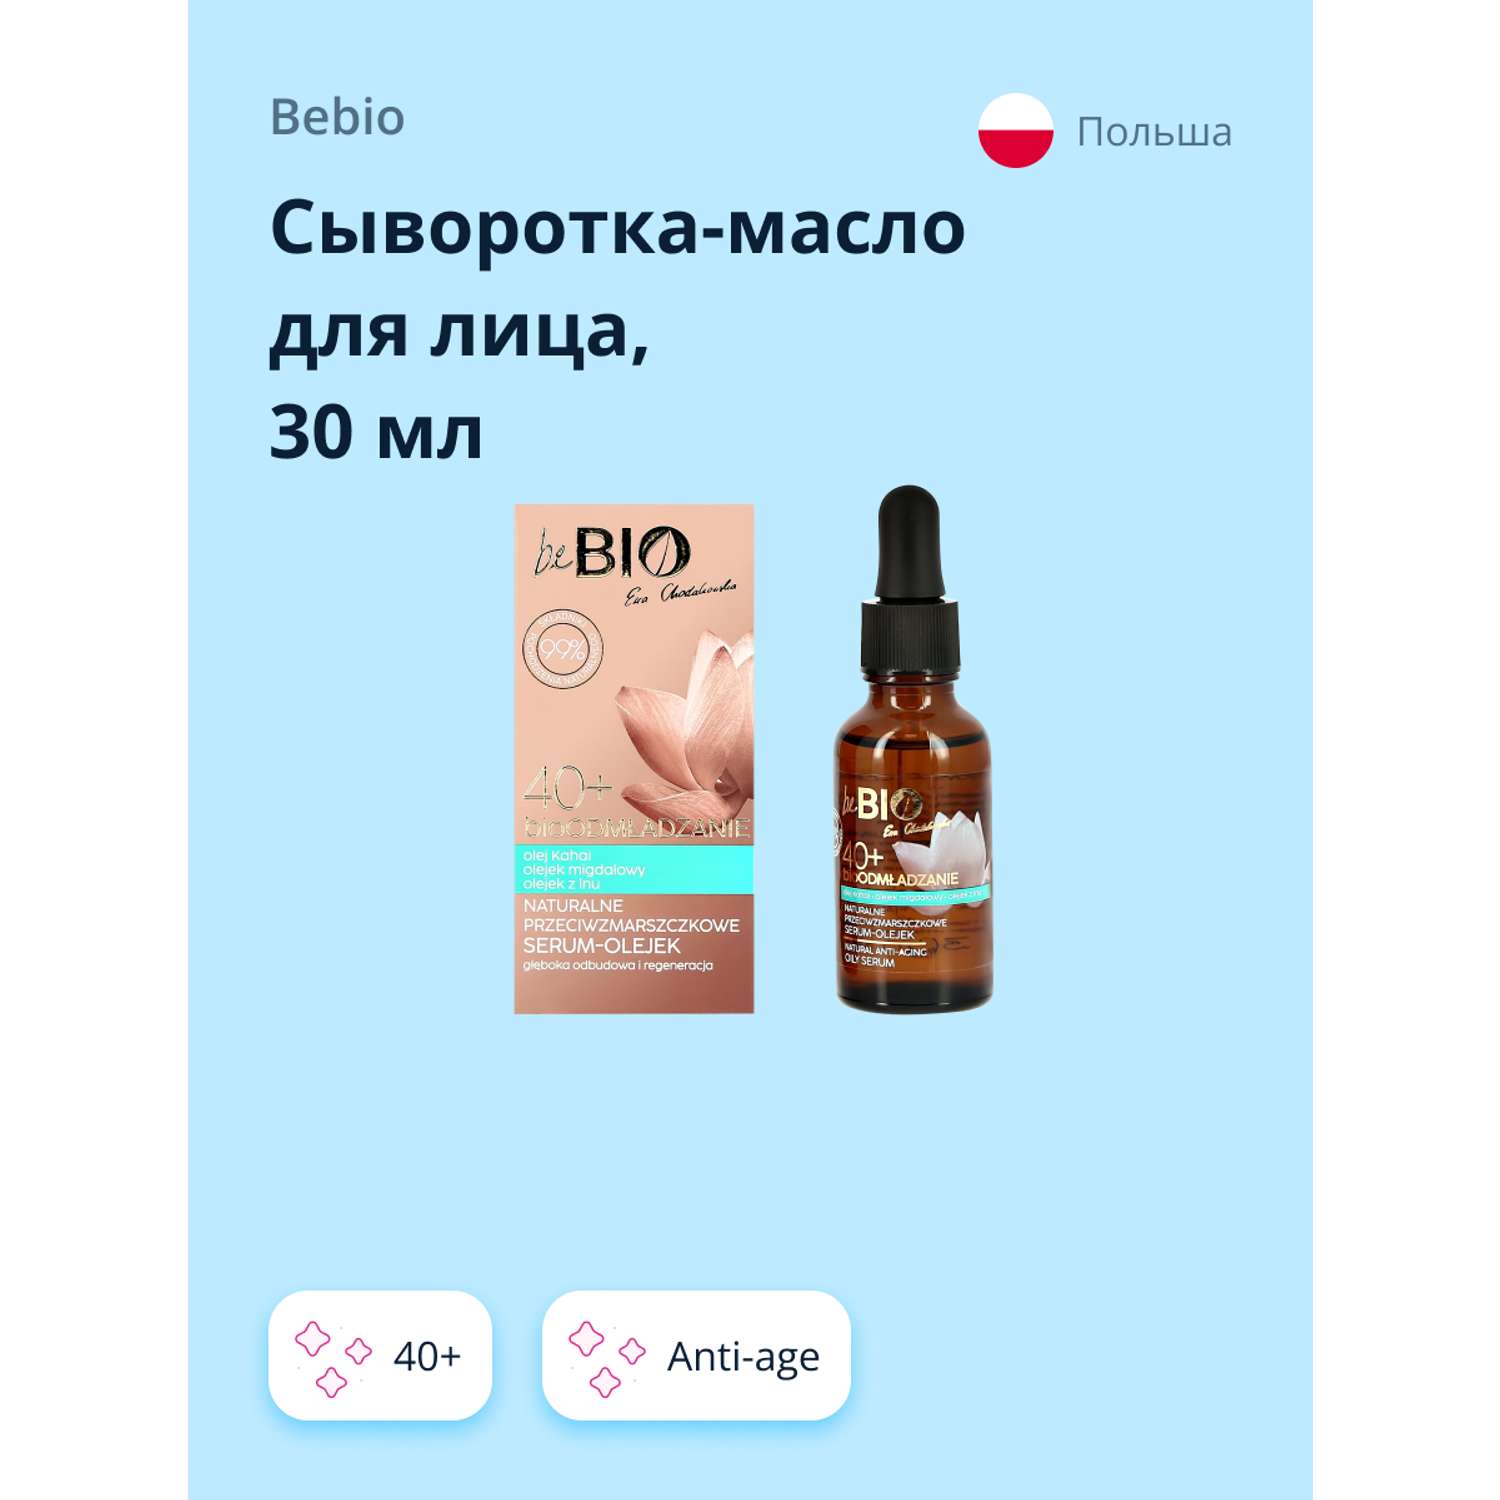 Сыворотка-масло beBio для лица 40+ anti-age 30 мл - фото 2